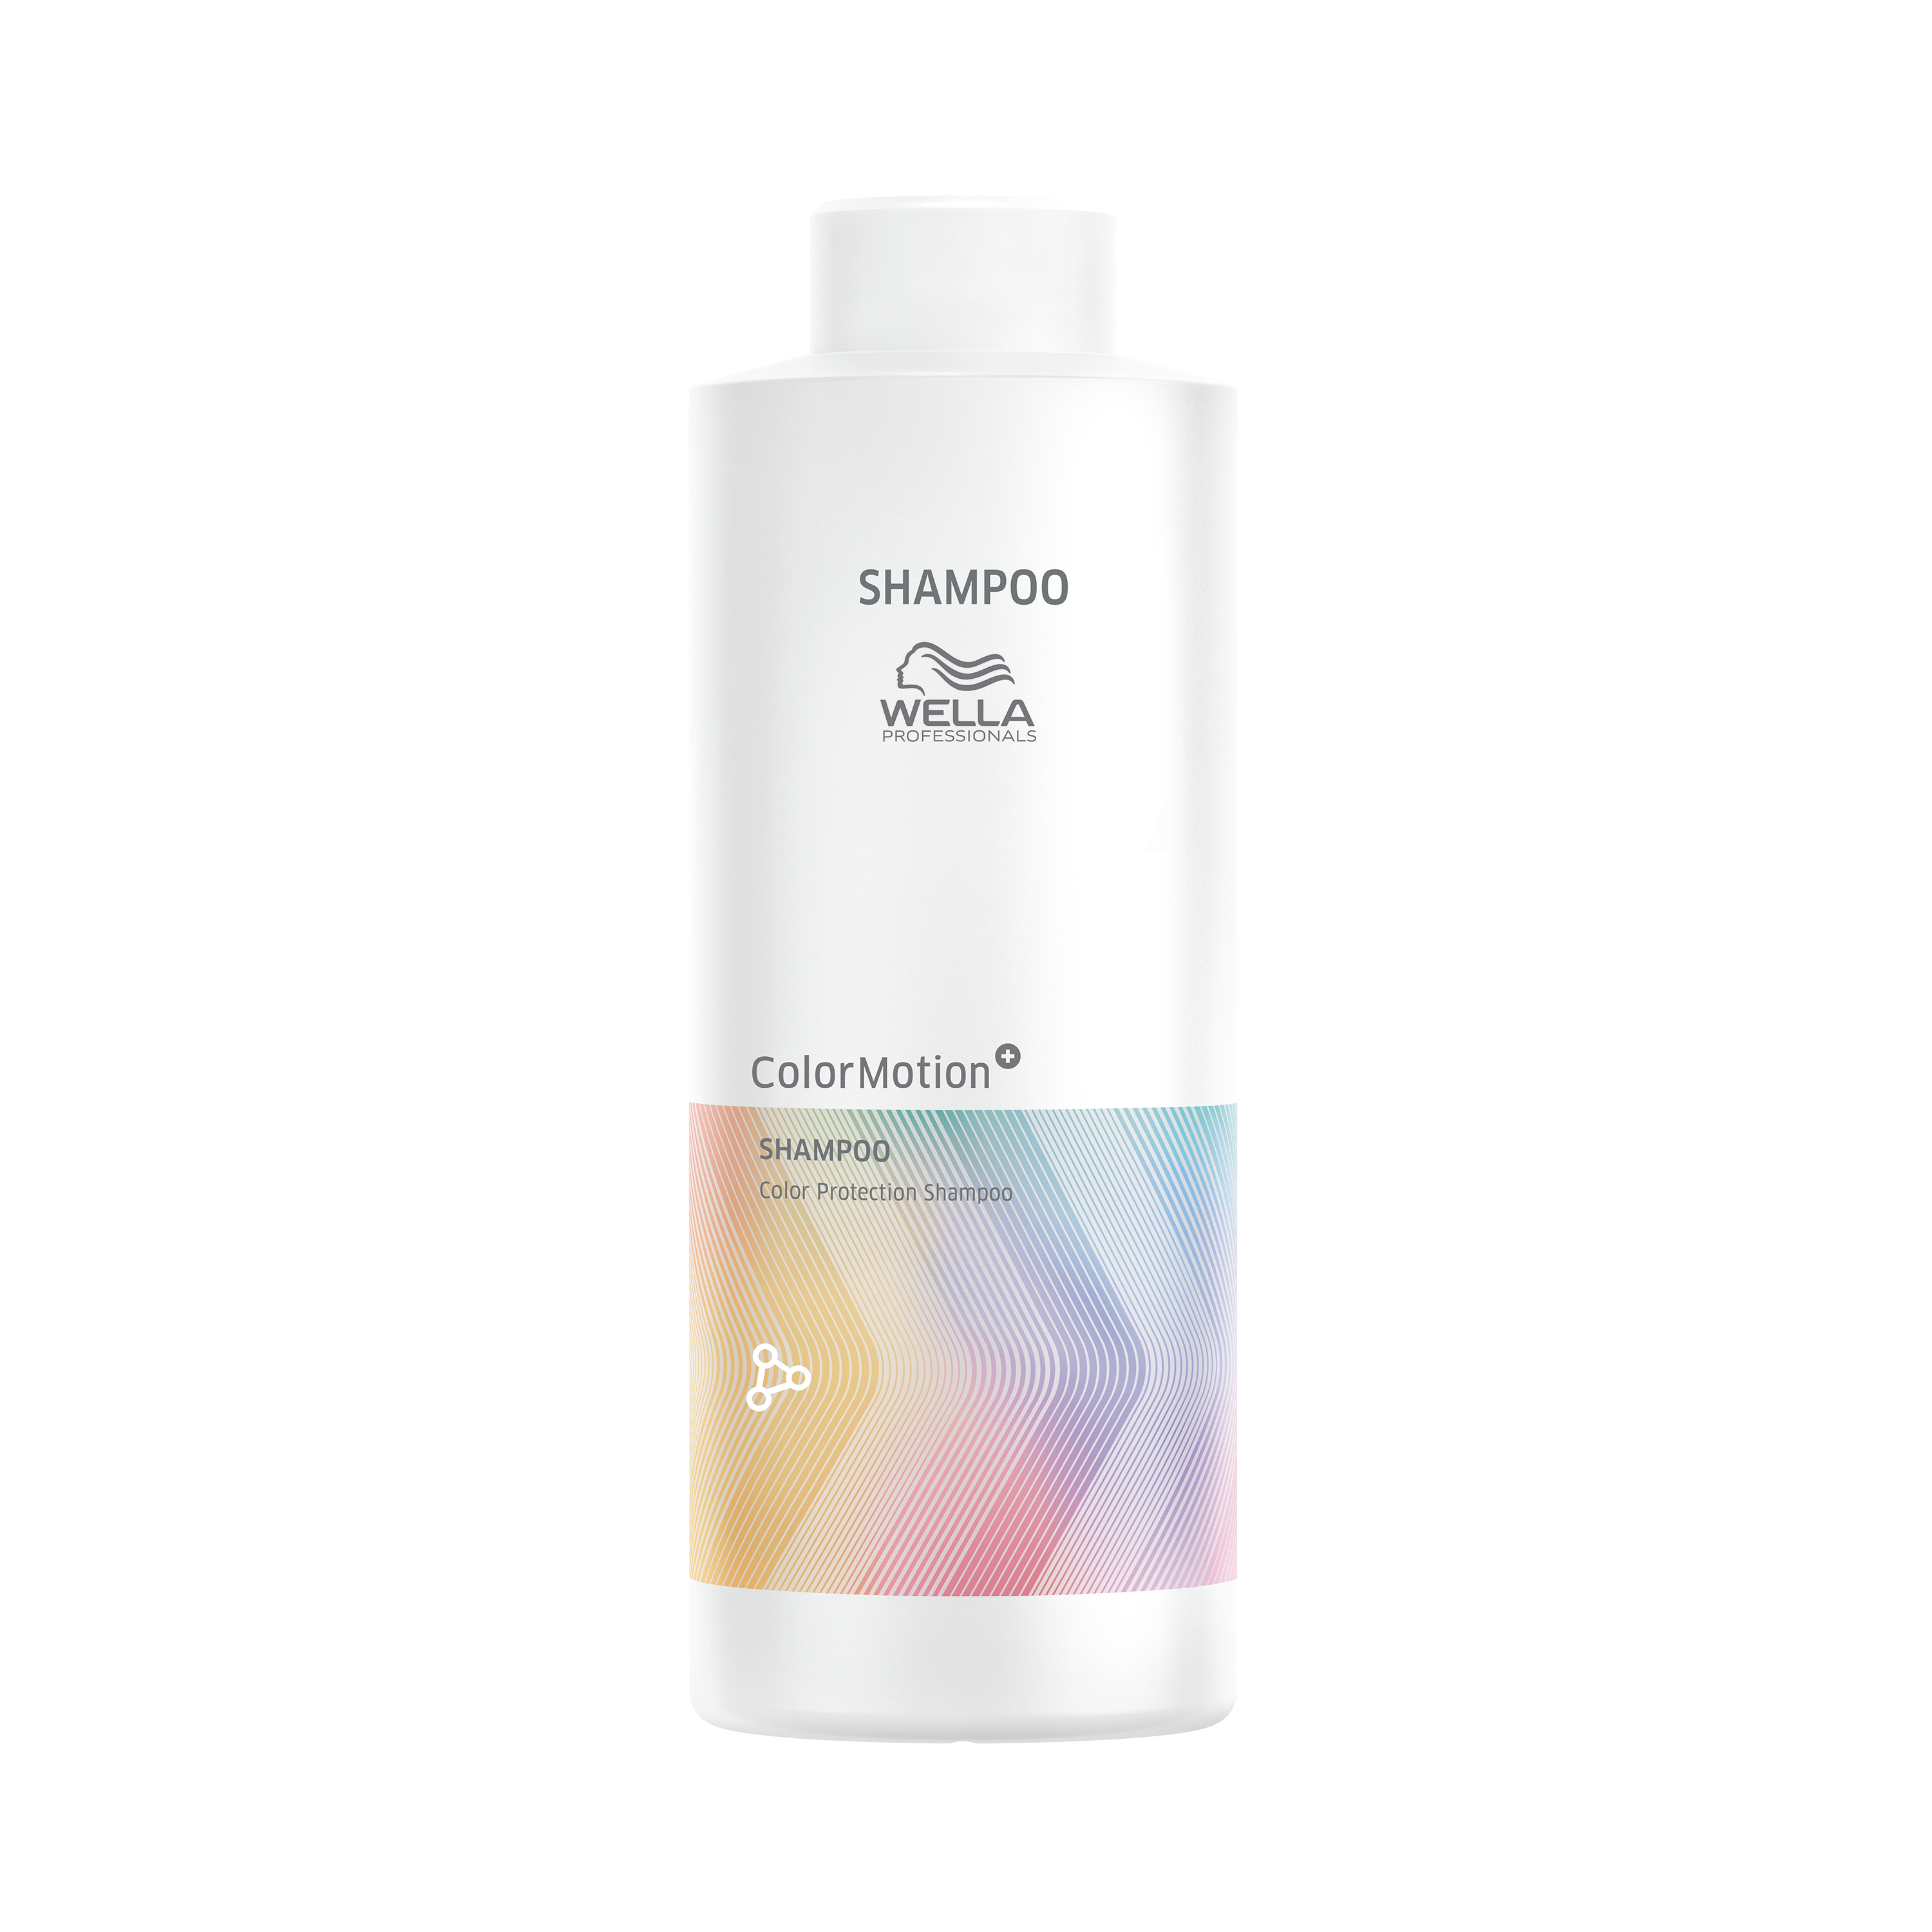 Wella ColorMotion+ Shampoo & Conditioner 1 Litre Duo